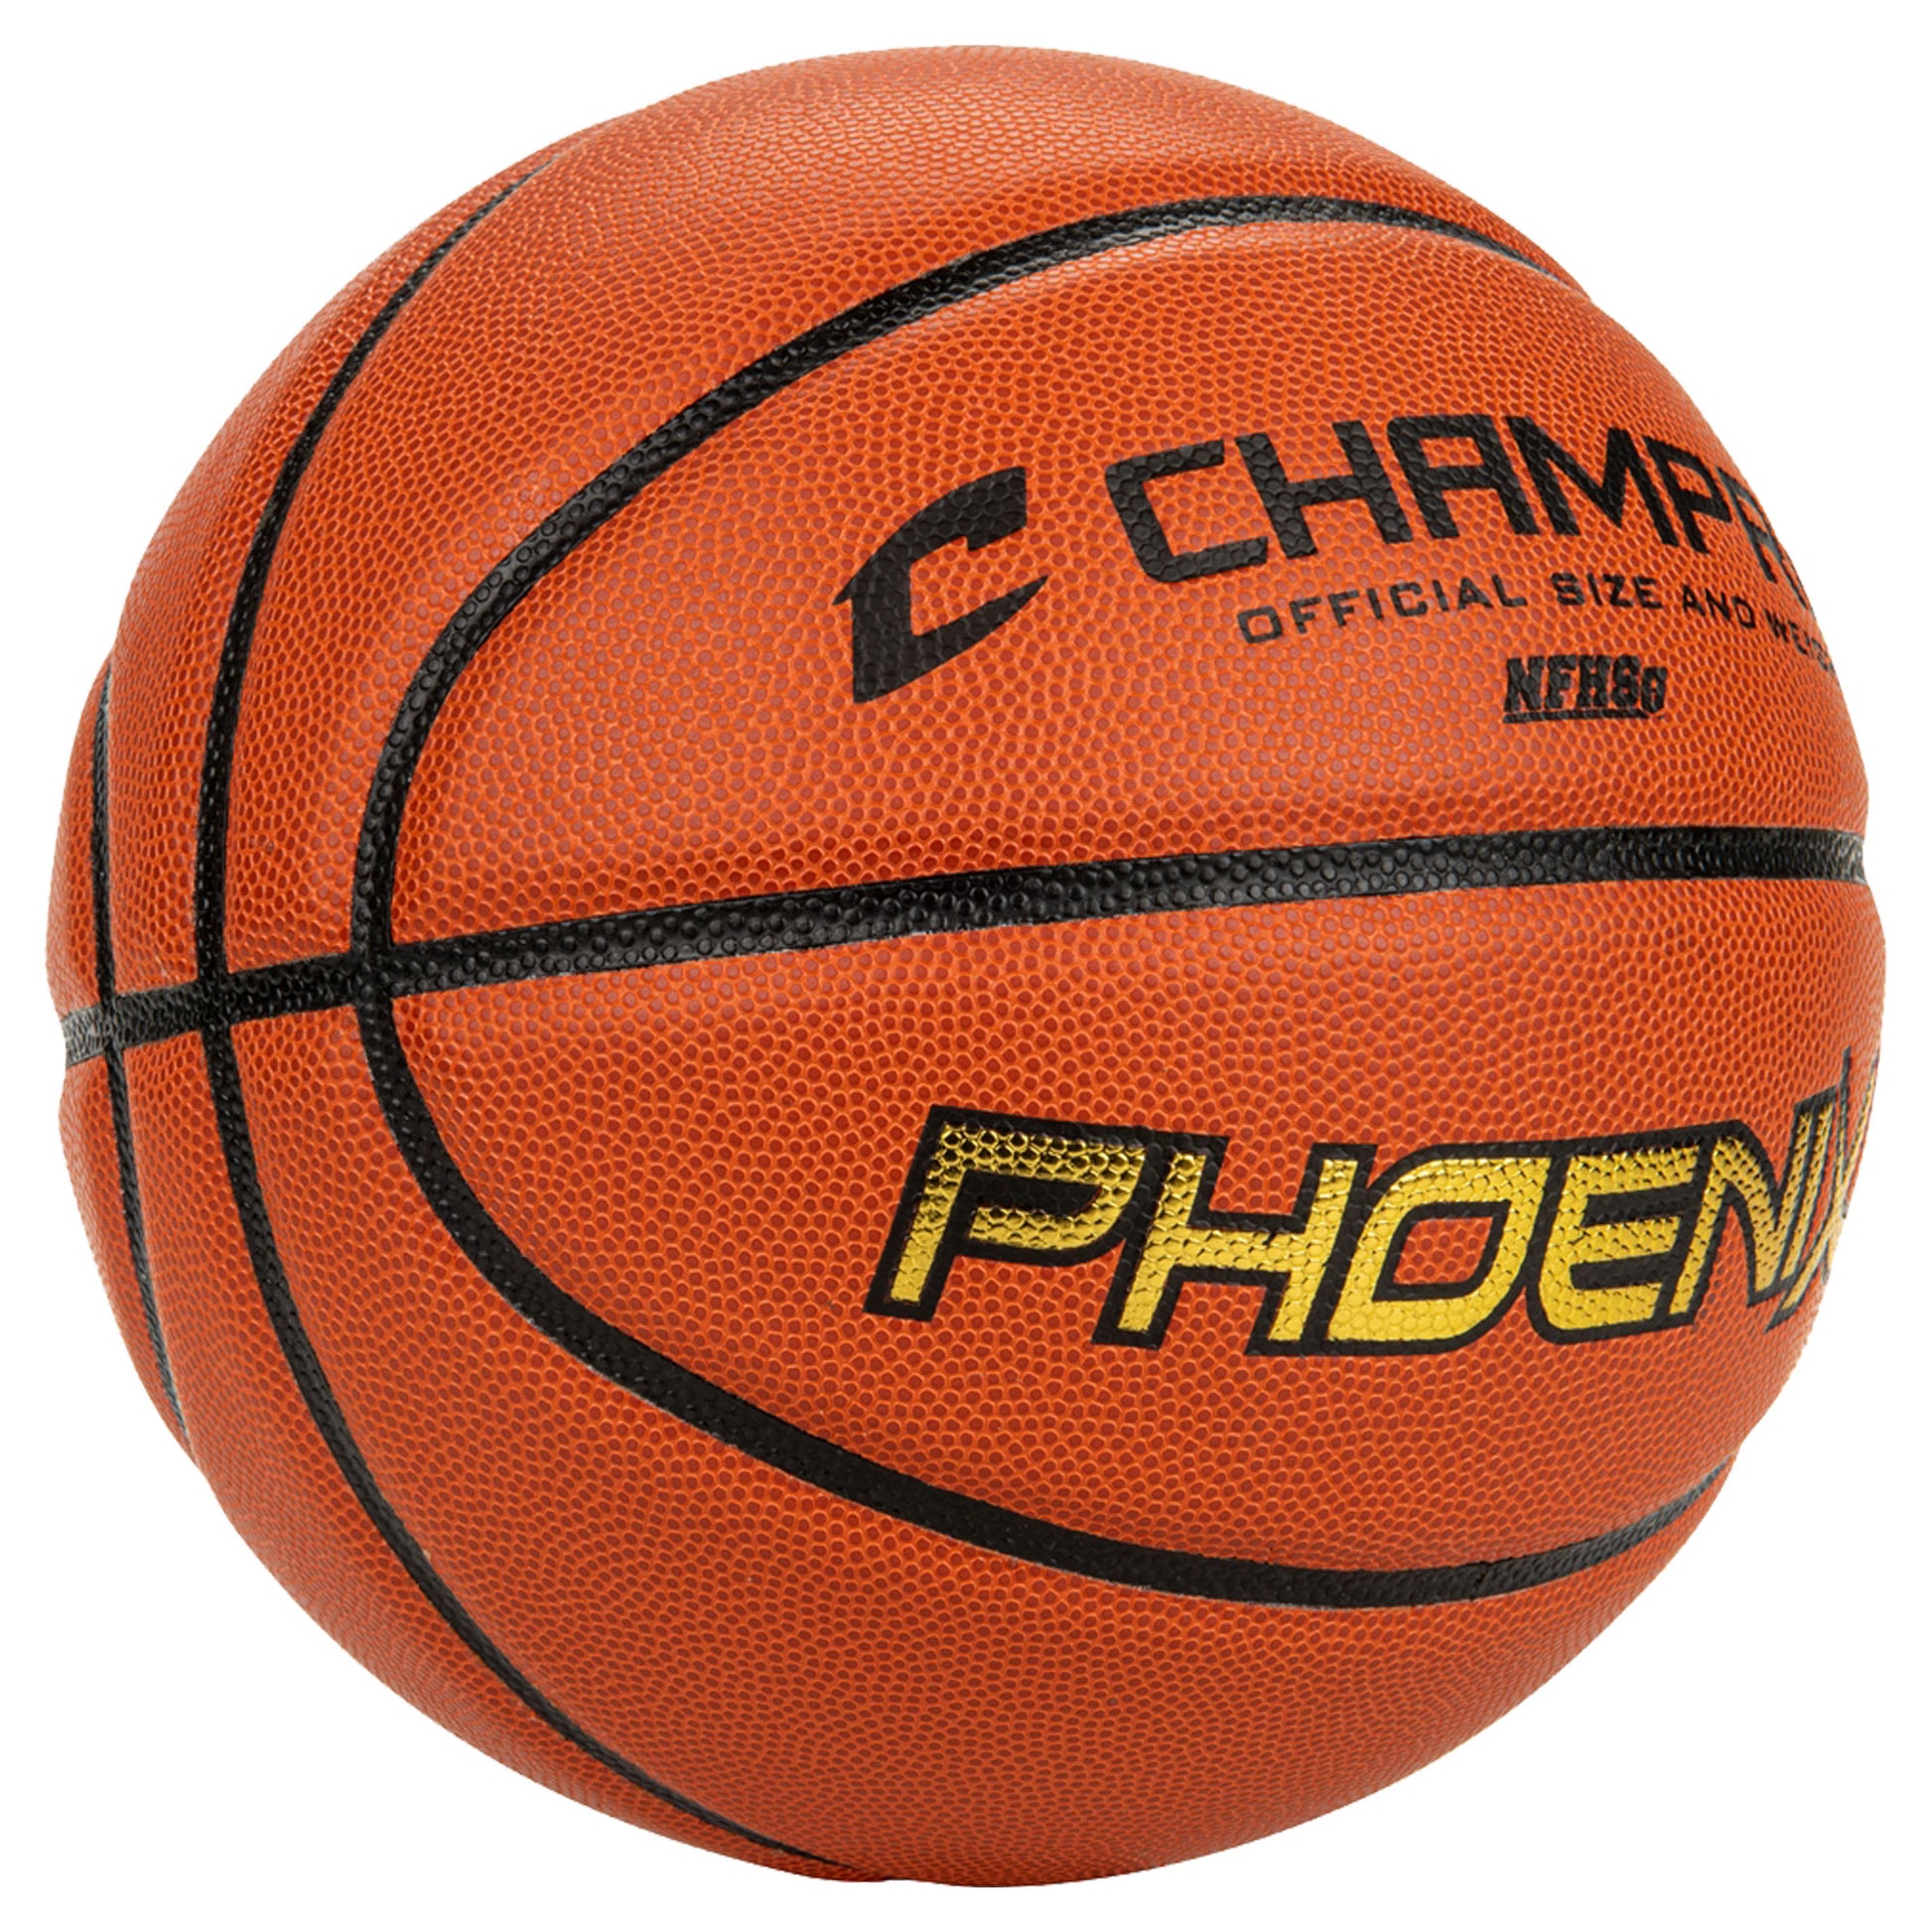 Champro Sports Phoenix Microfiber Indoor Basketball – Red's Team Sports